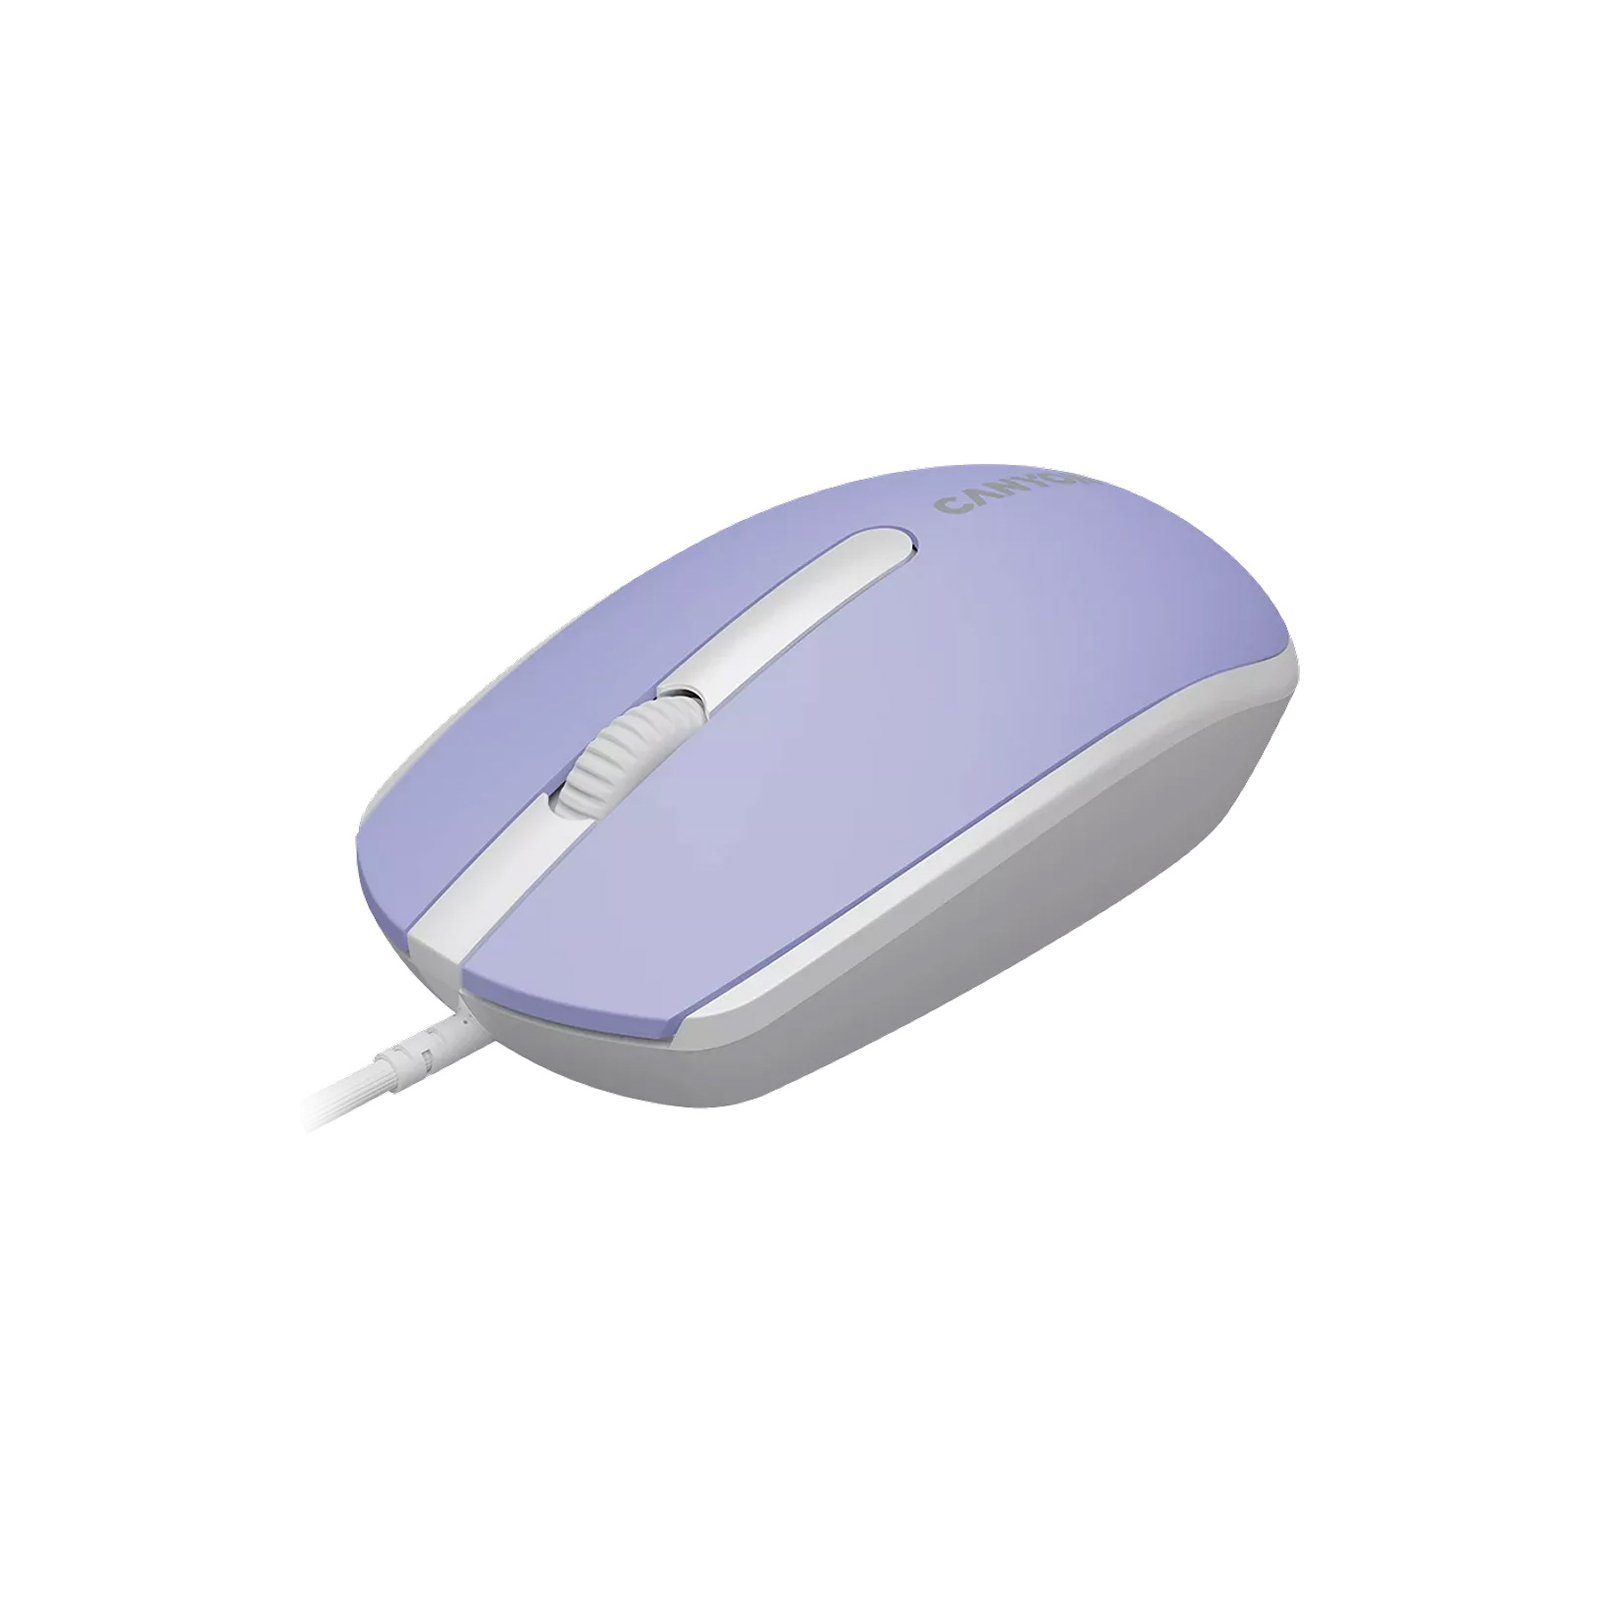 Мышка Canyon M-10 USB White Lavender (CNE-CMS10WL) изображение 3